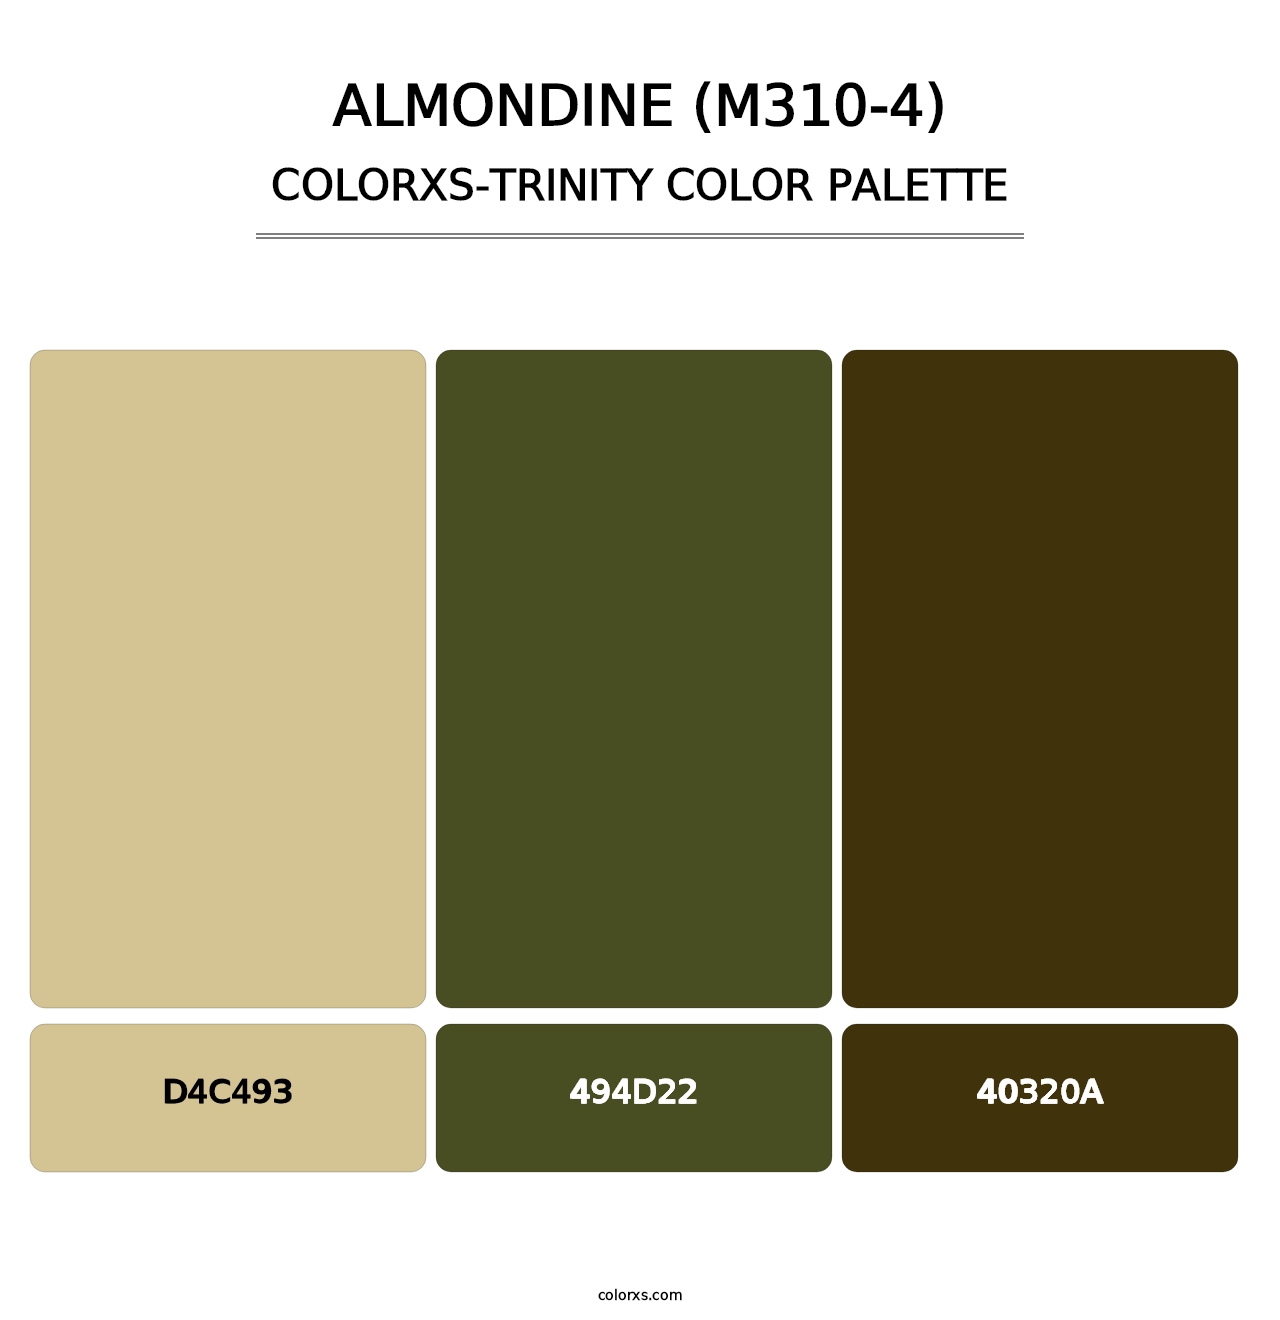 Almondine (M310-4) - Colorxs Trinity Palette